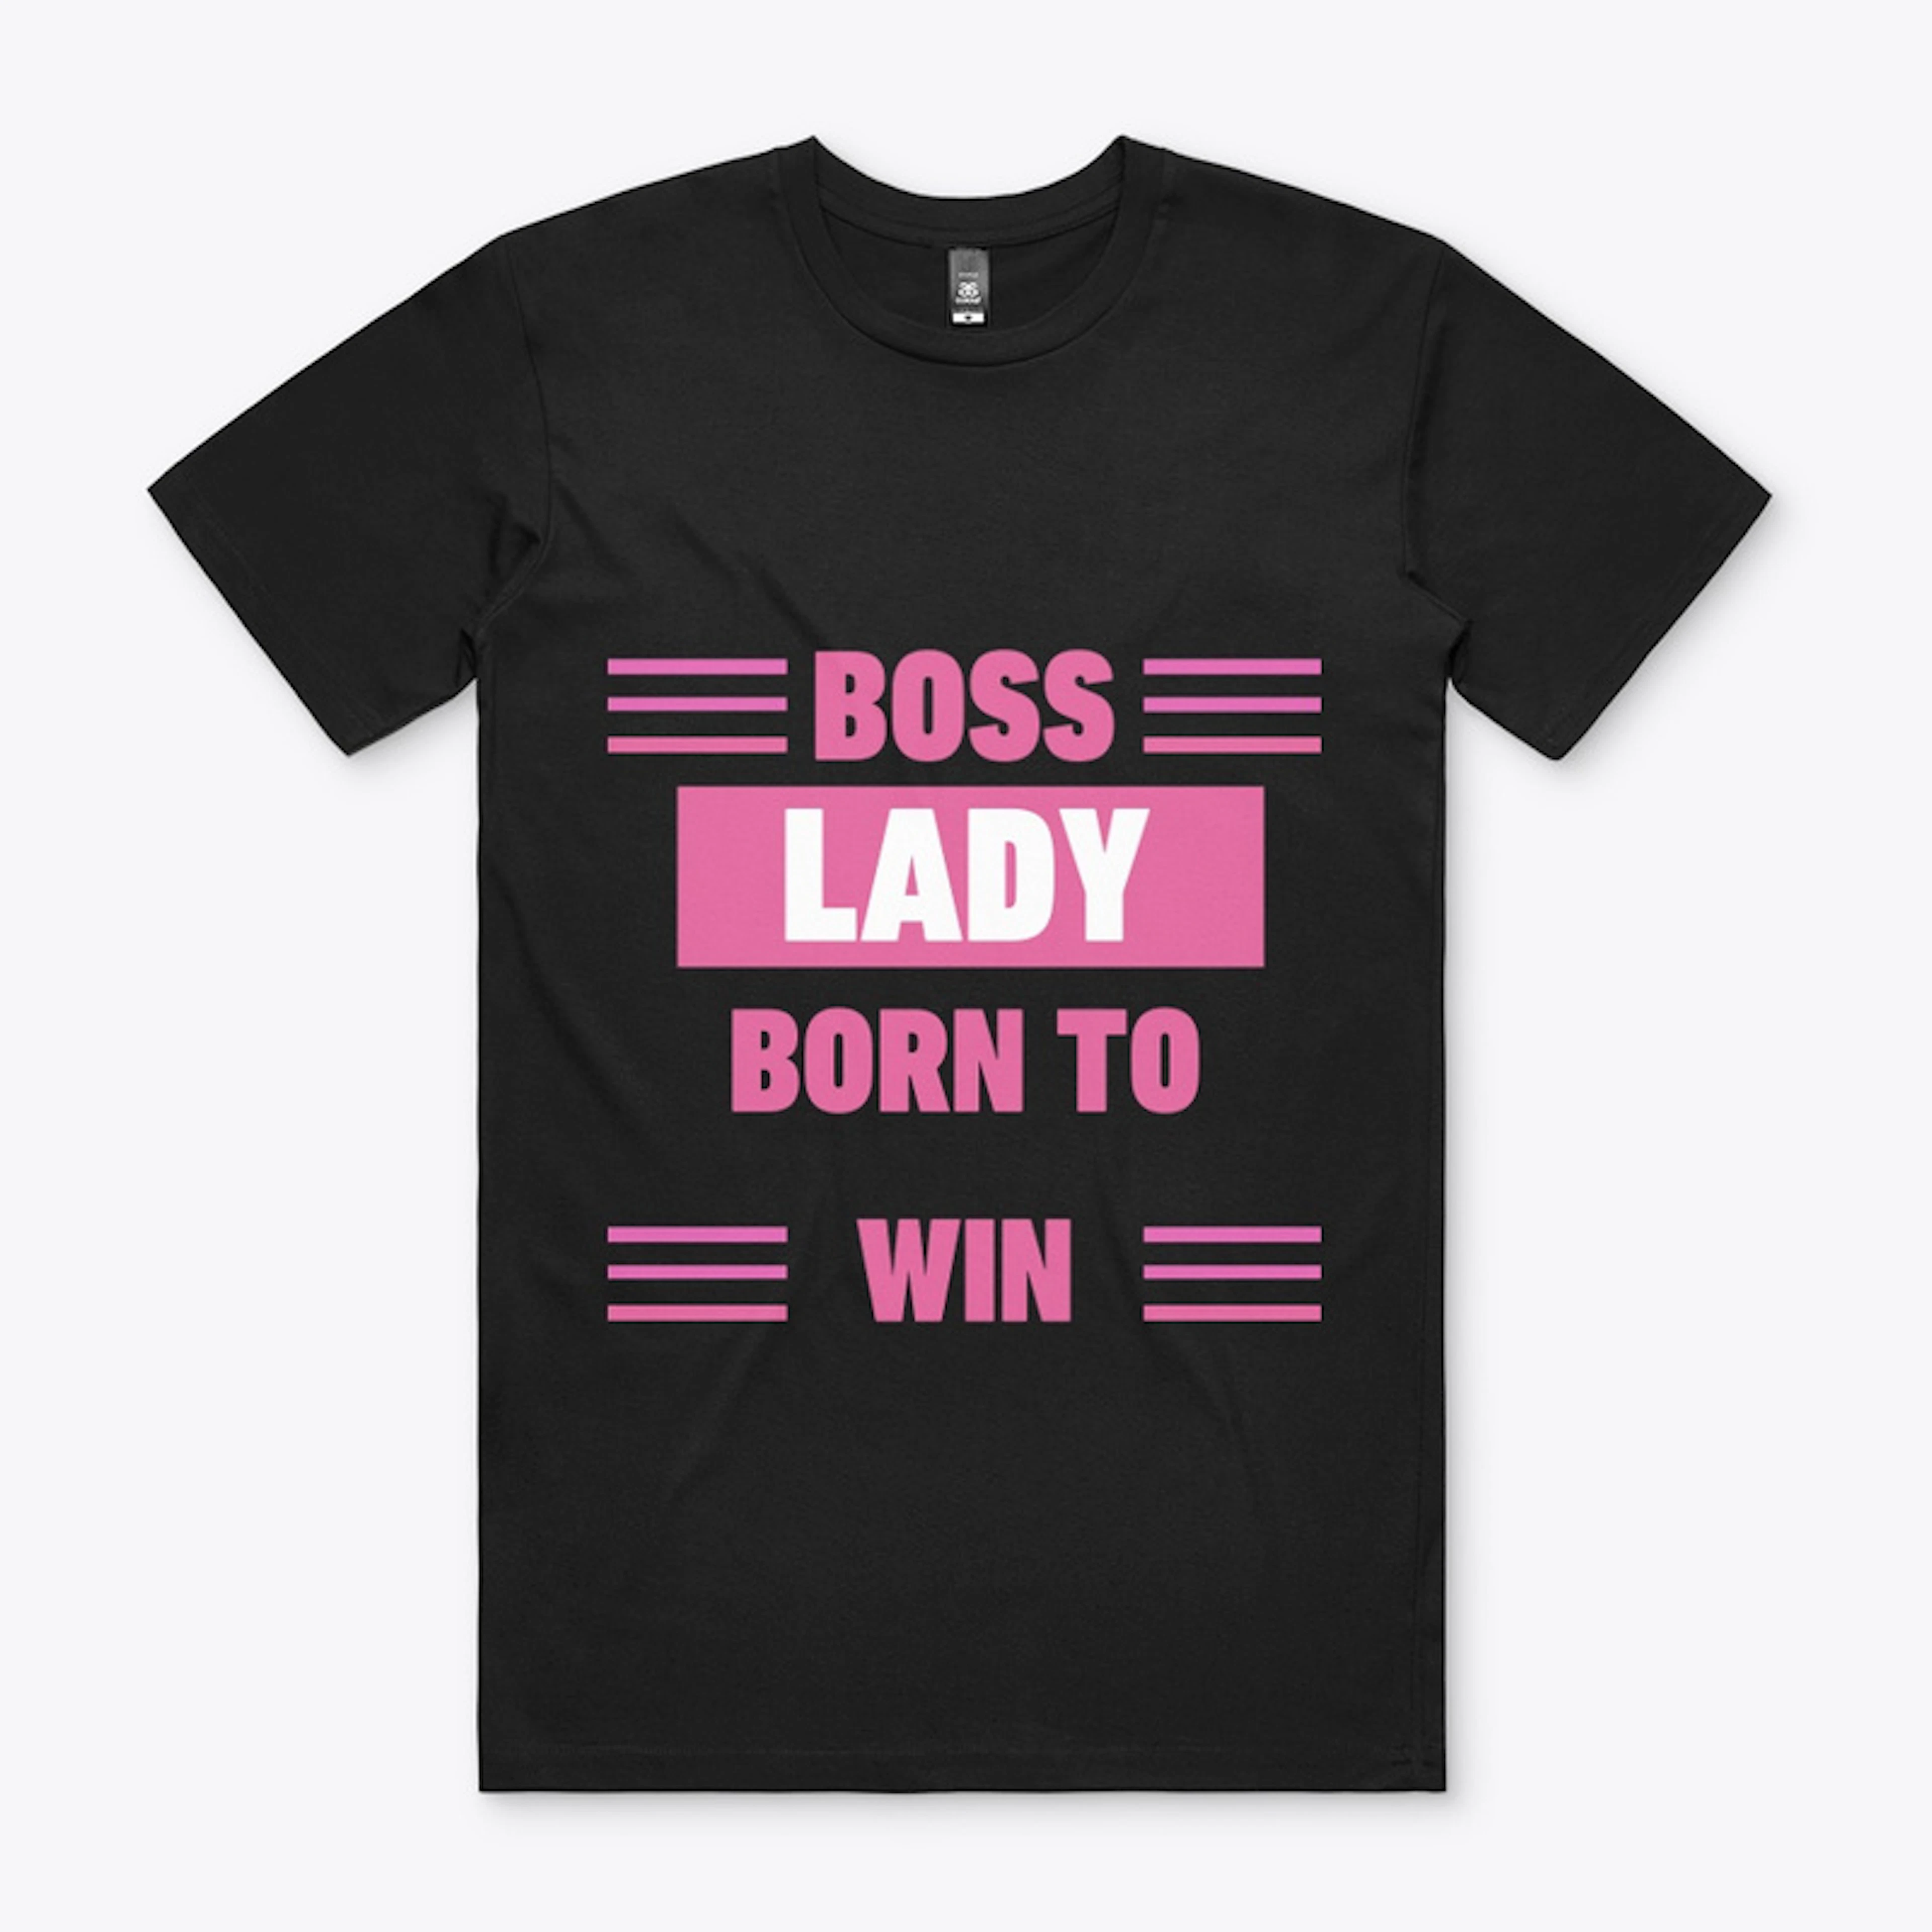 BOSS LADY BORN TO WIN